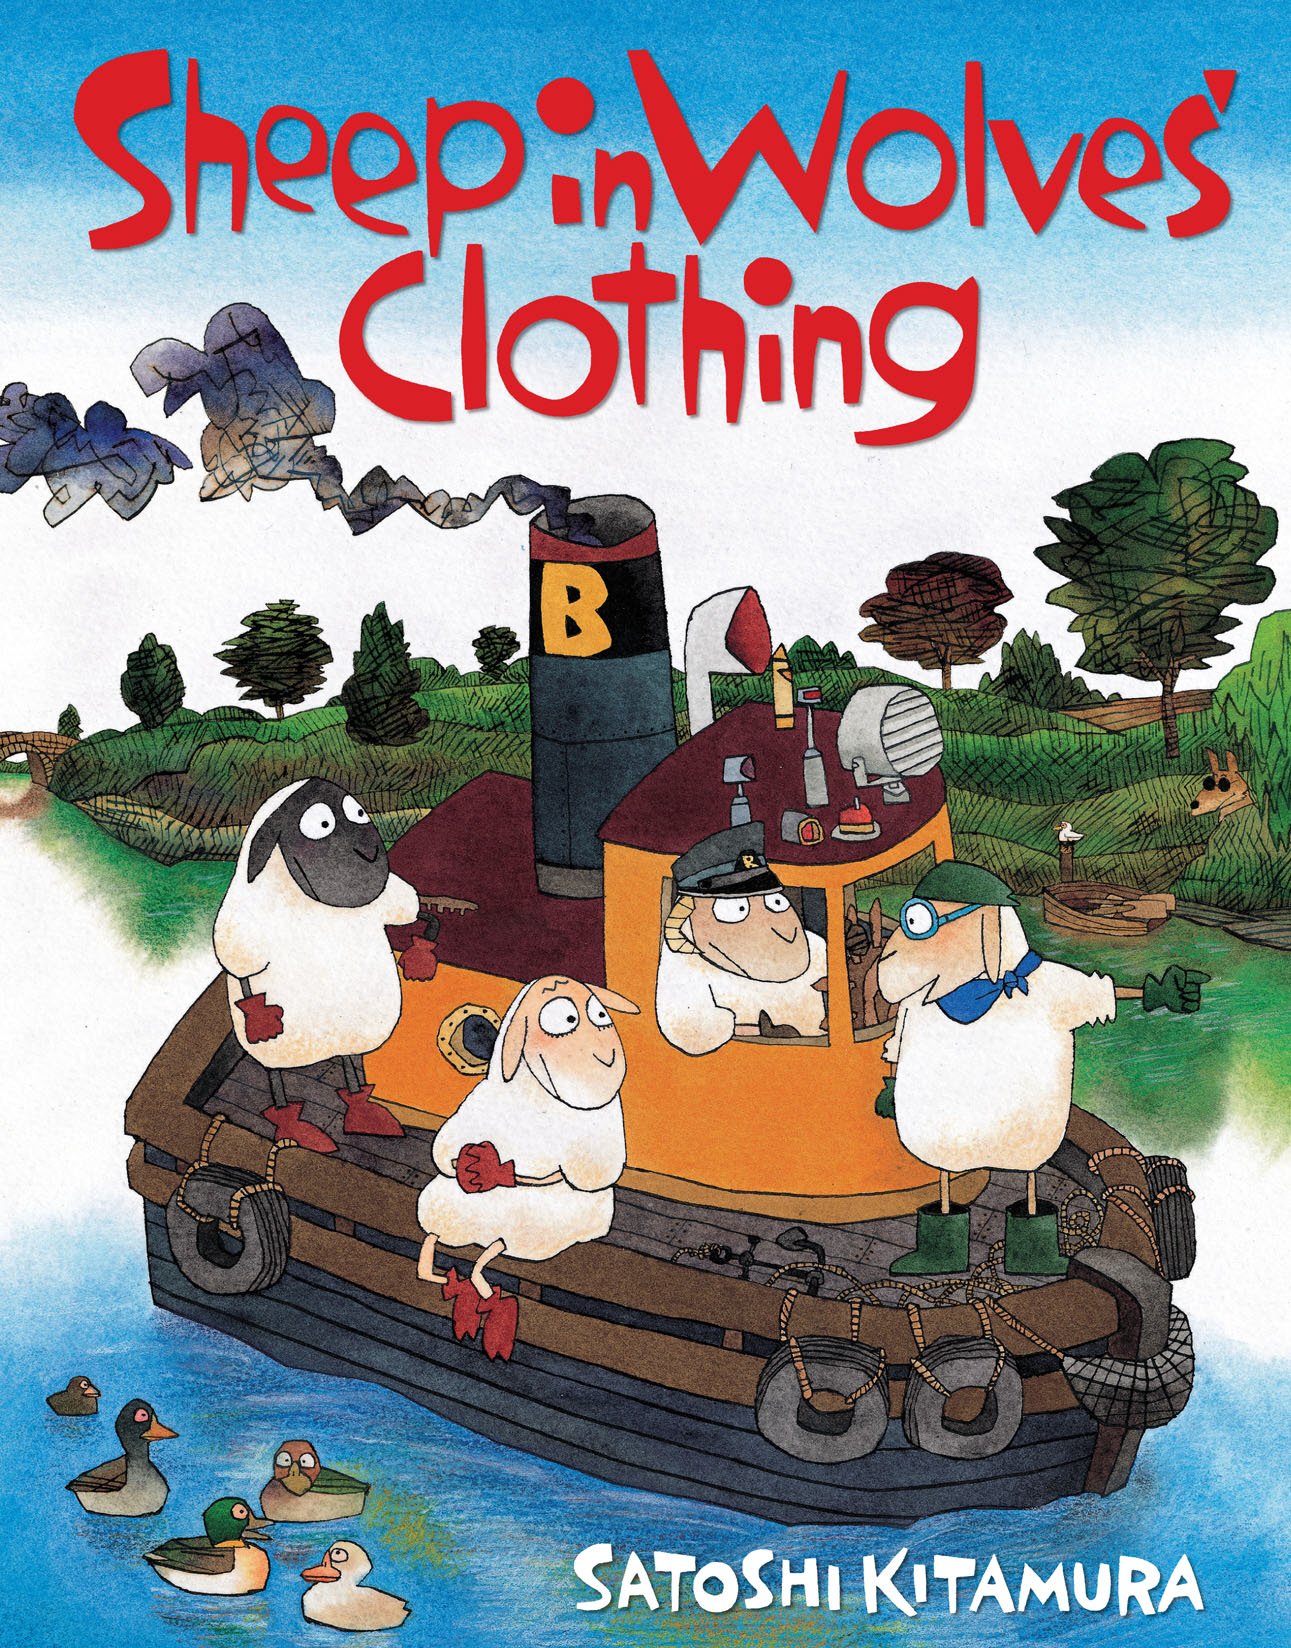 Sheep in Wolves' Clothing by Satoshi Kitamura